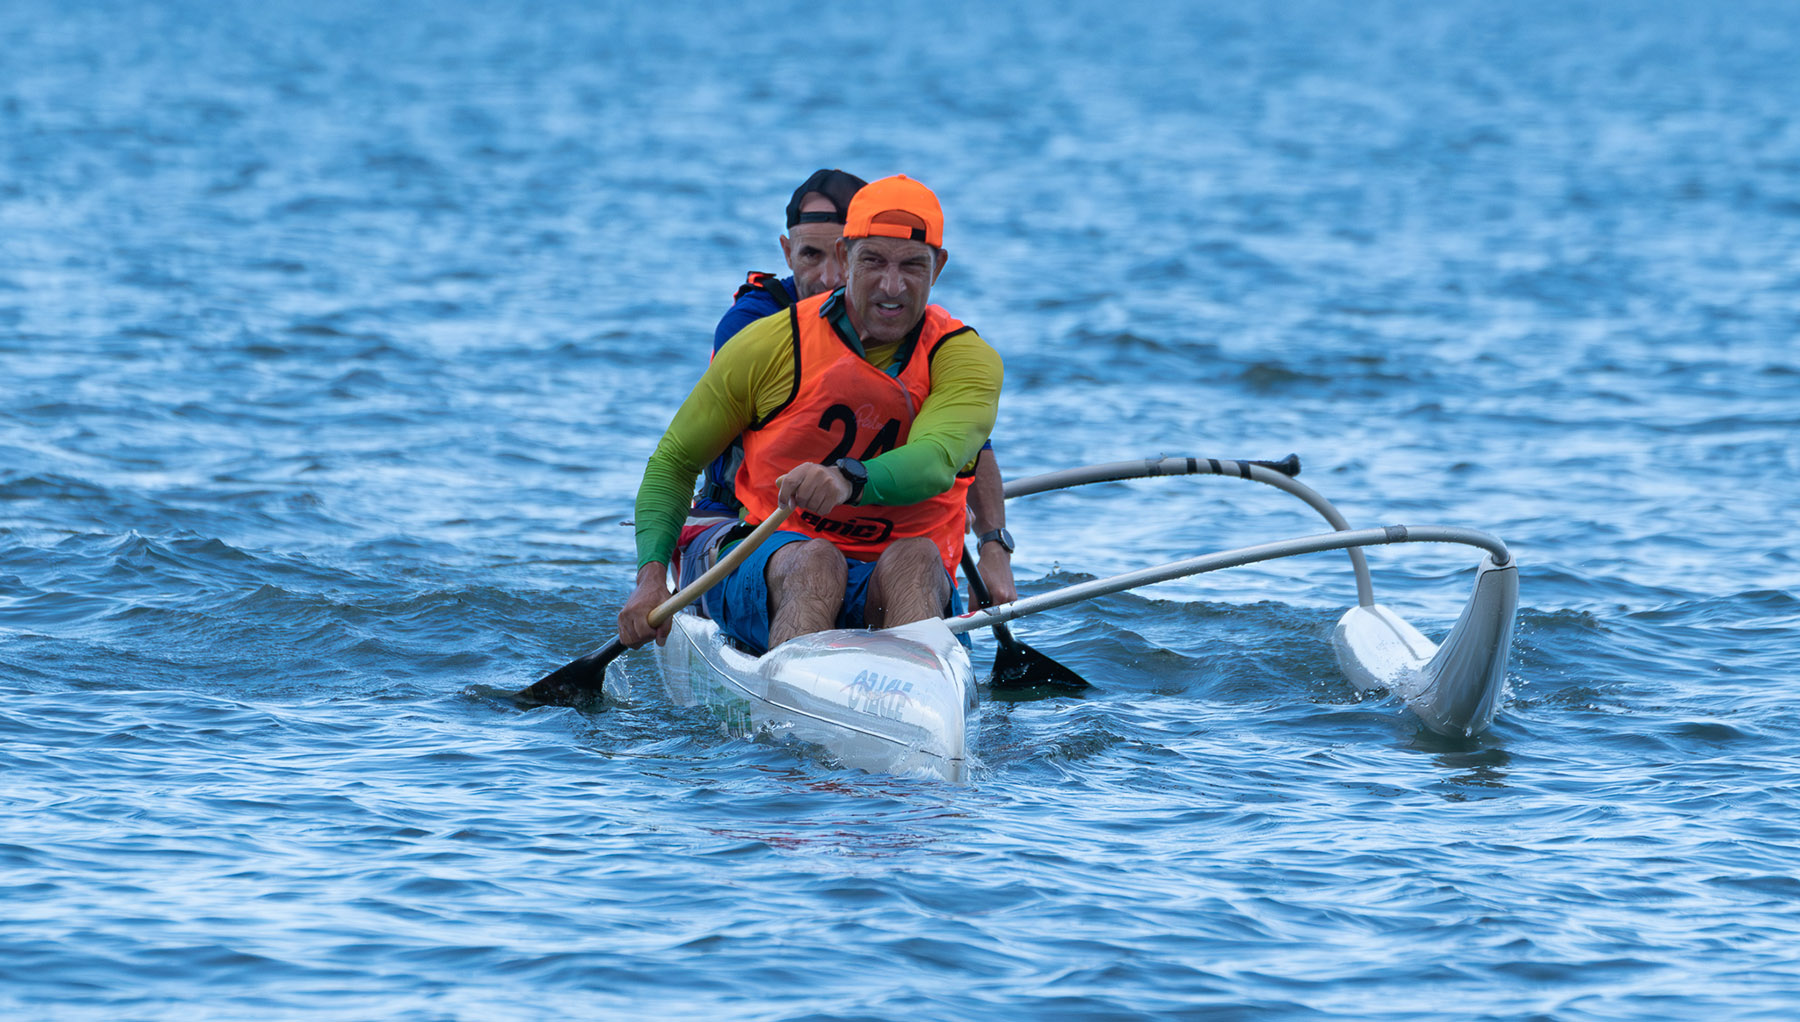 Ocean canoe at the finish line